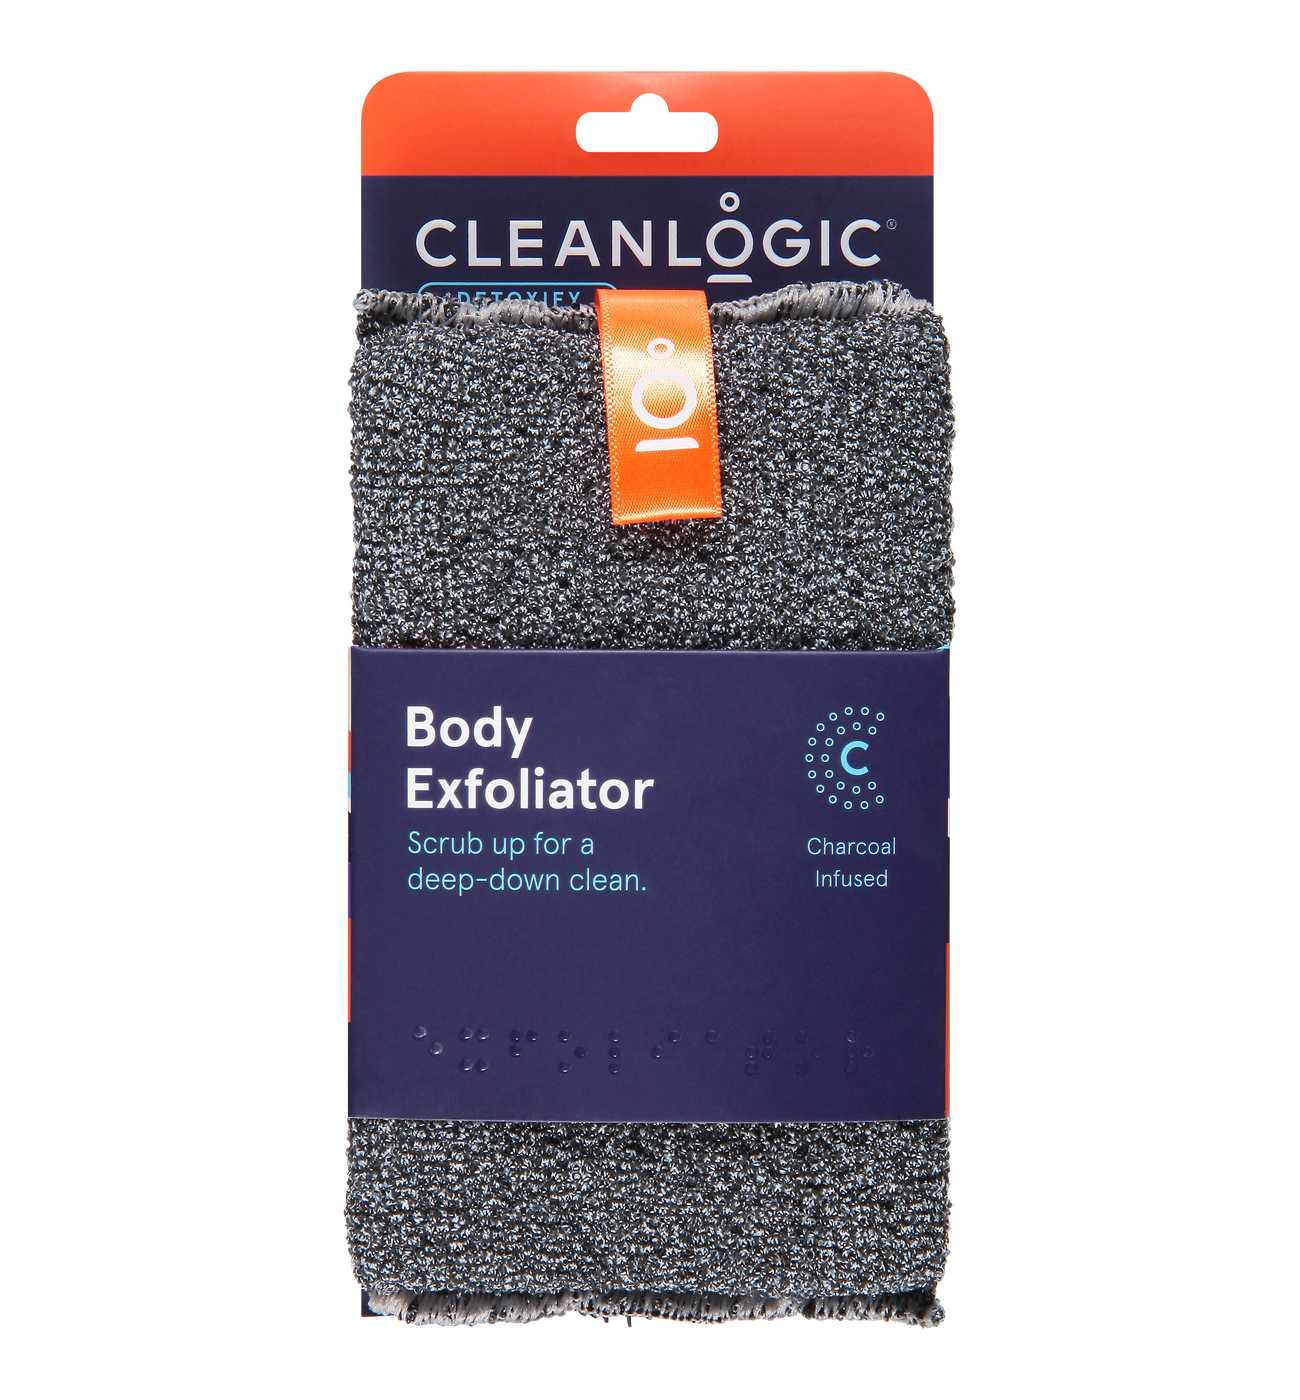 Cleanlogic Detoxify Body Exfoliator; image 1 of 2